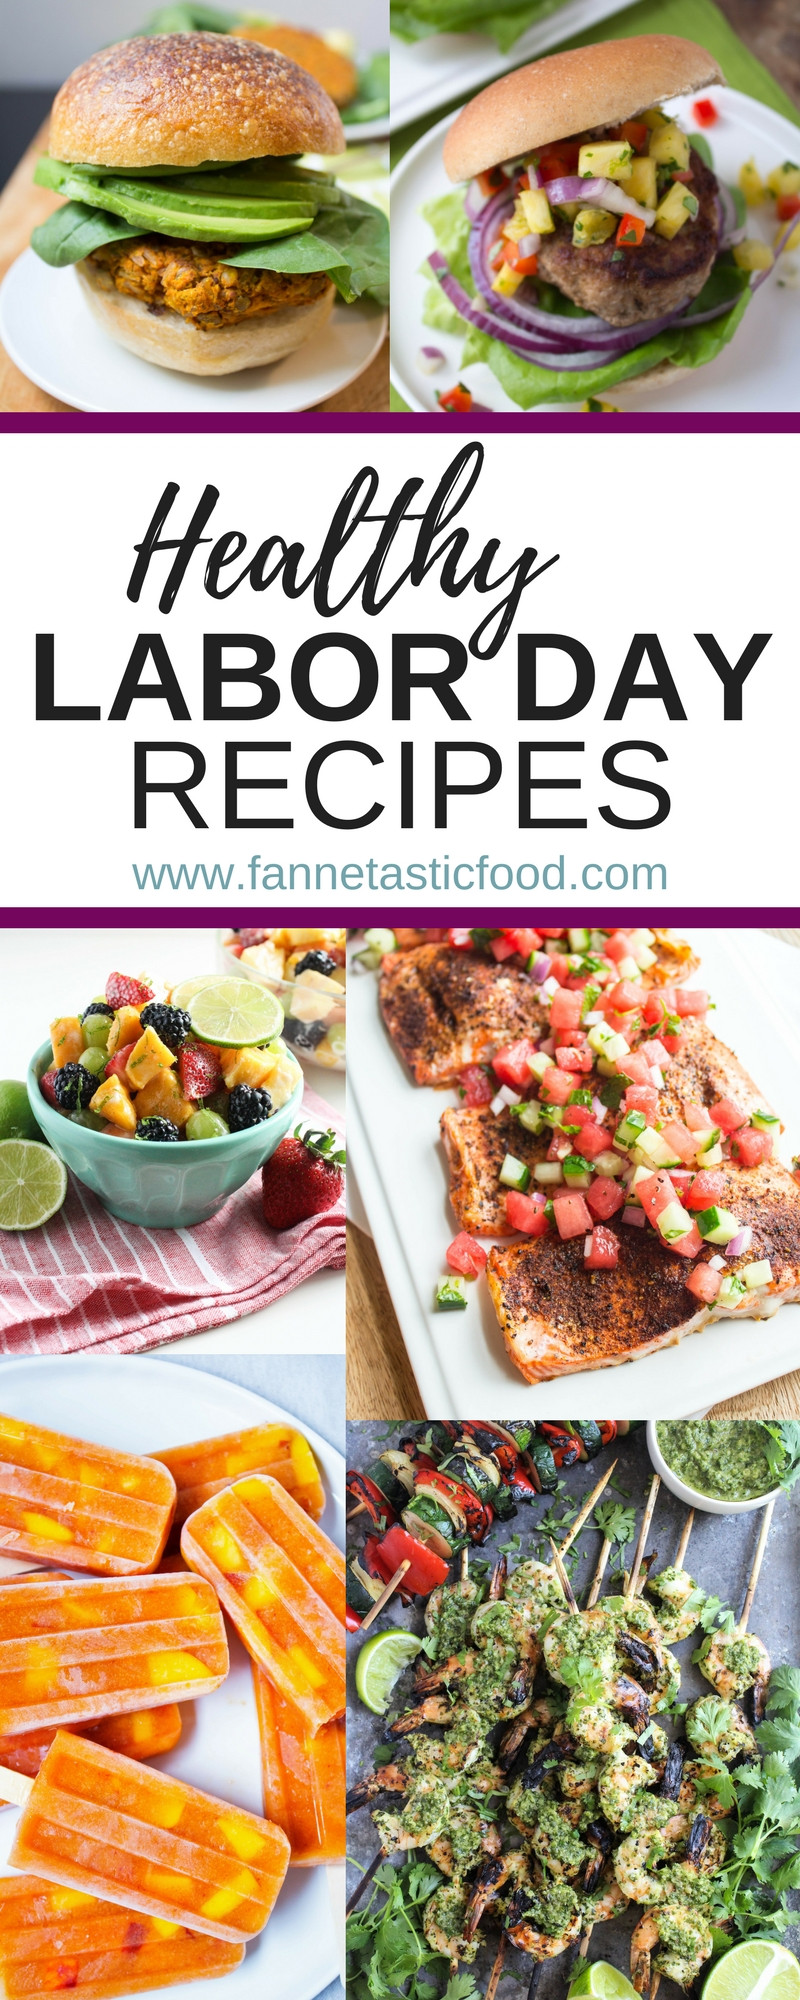 Labor Day Recipe
 Healthy Labor Day Recipes fANNEtastic food